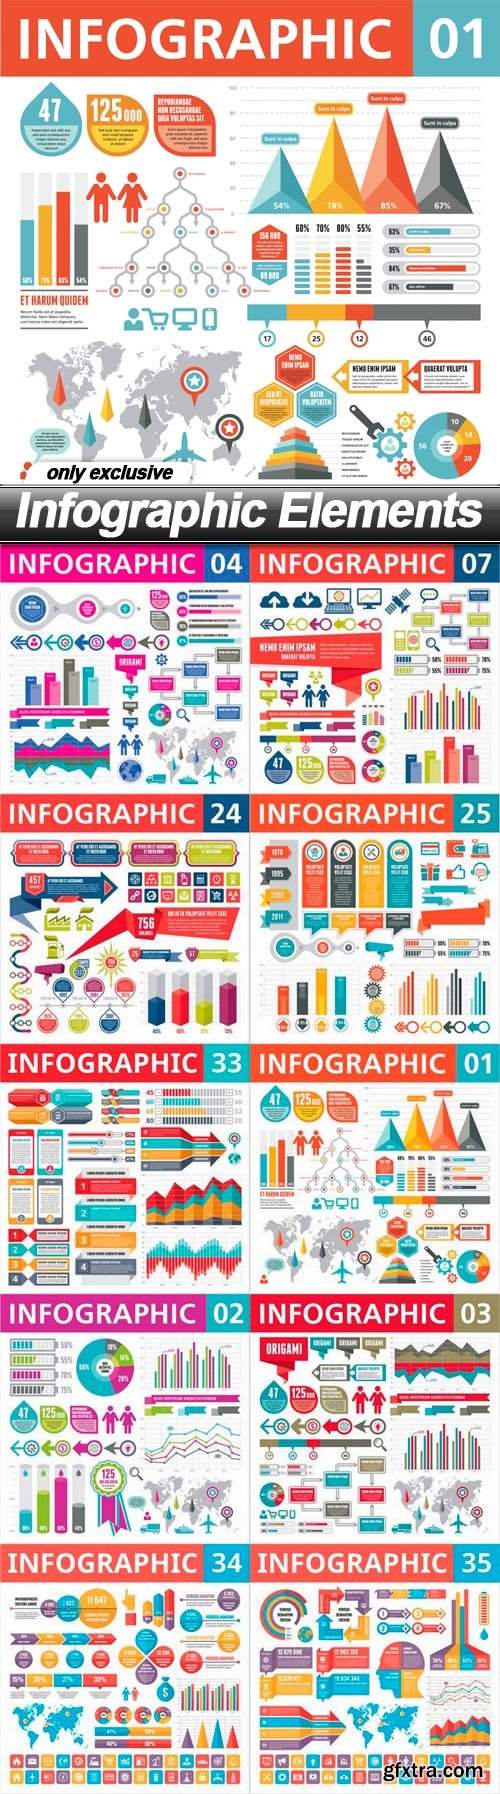 Infographic Elements - 10 EPS